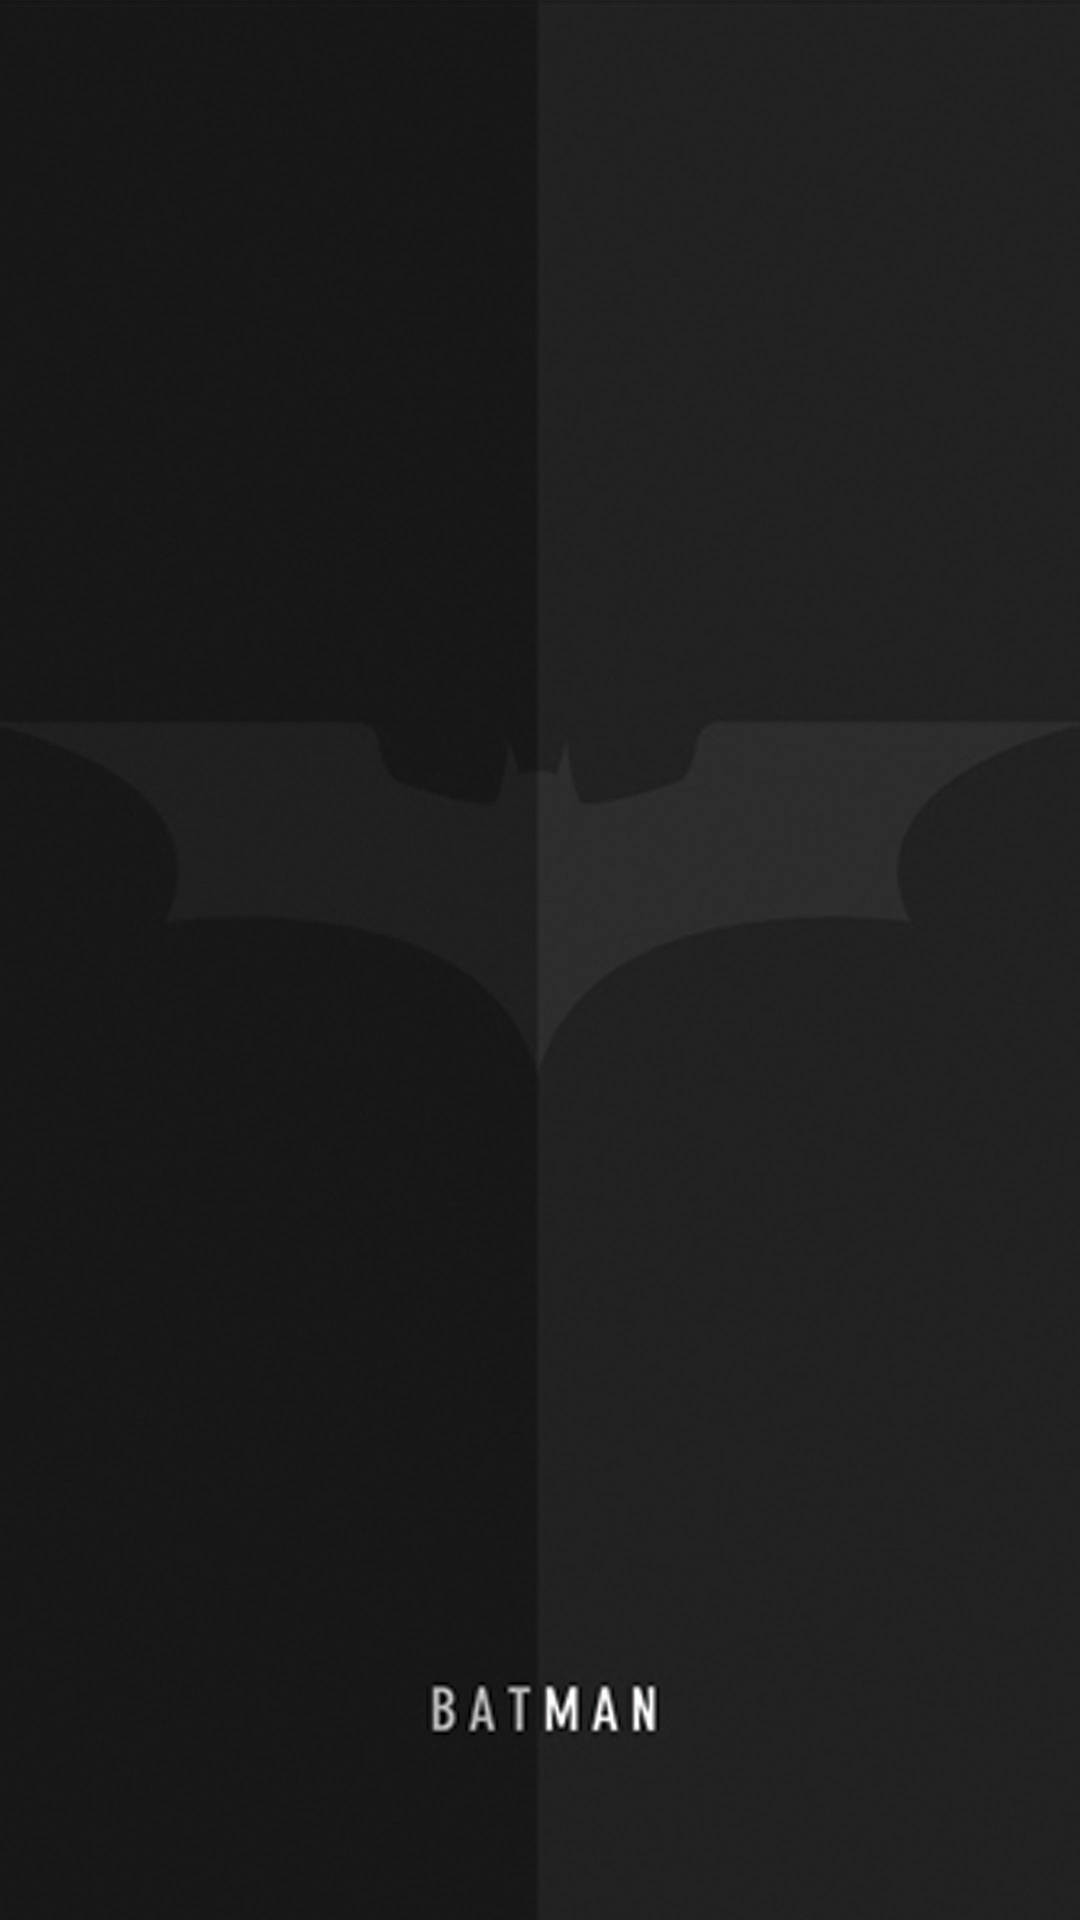 Minimalist Batman Logo Phone Background